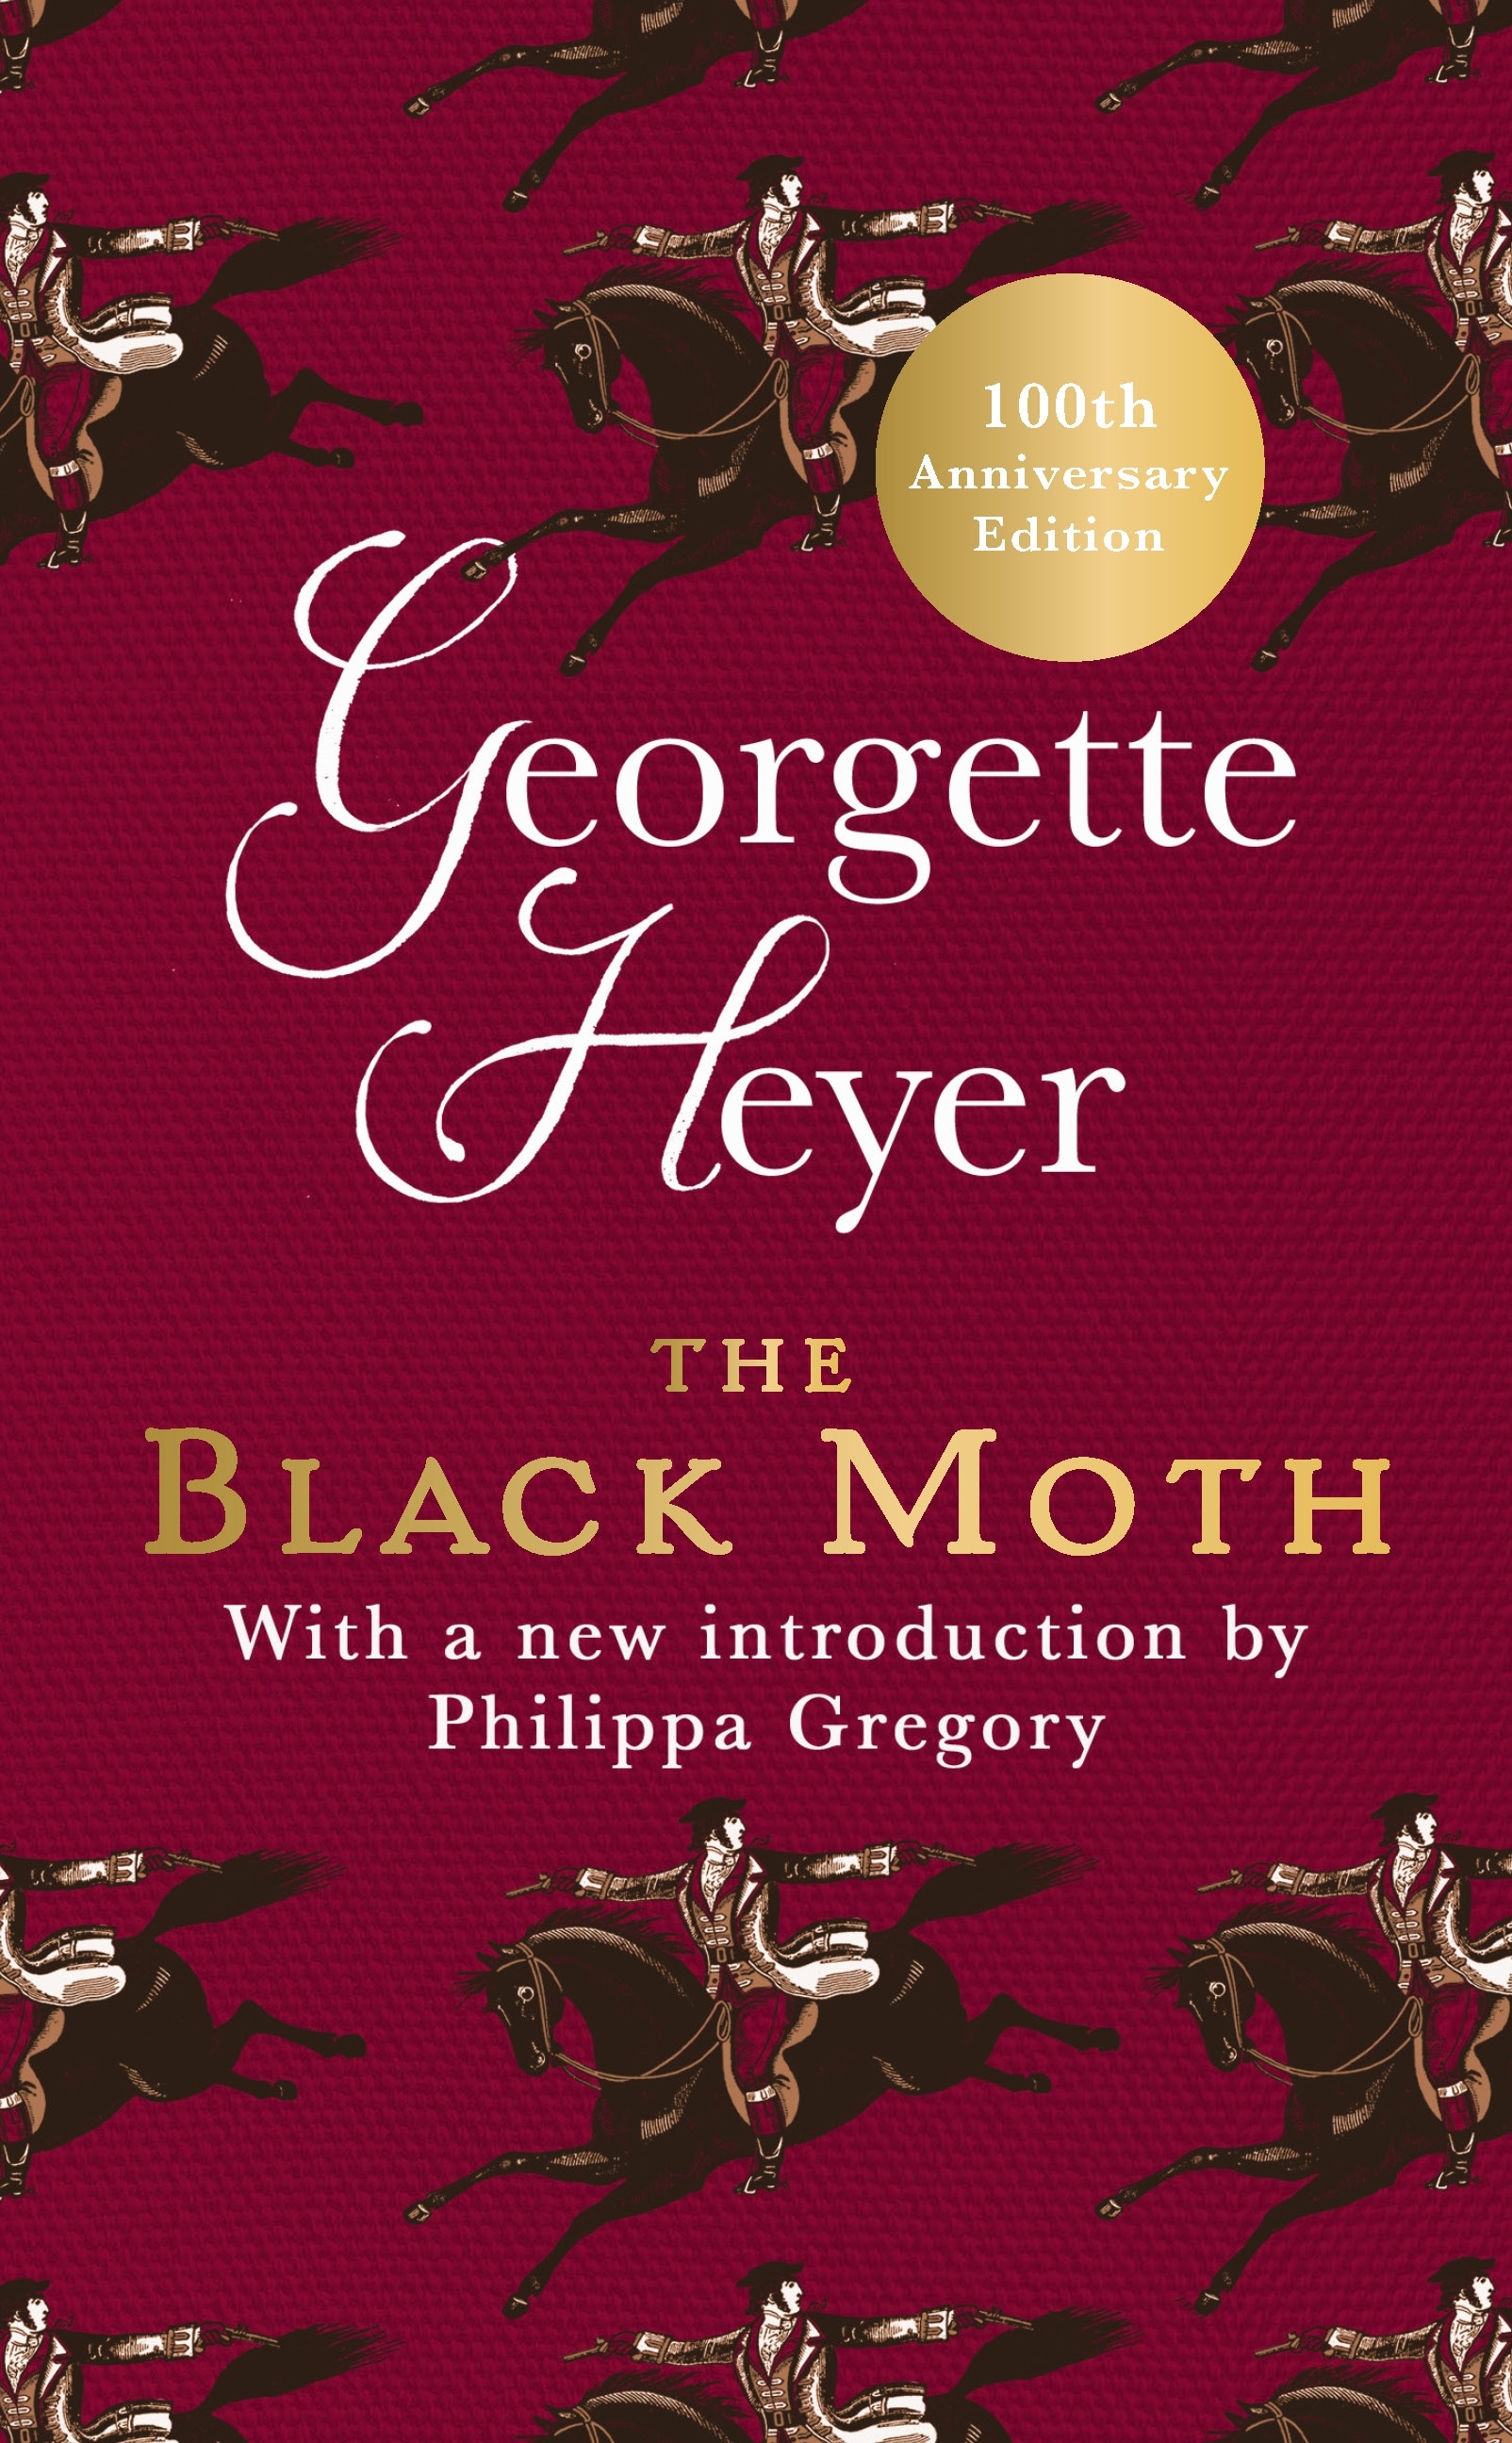 Book “The Black Moth” by Georgette Heyer — August 26, 2021